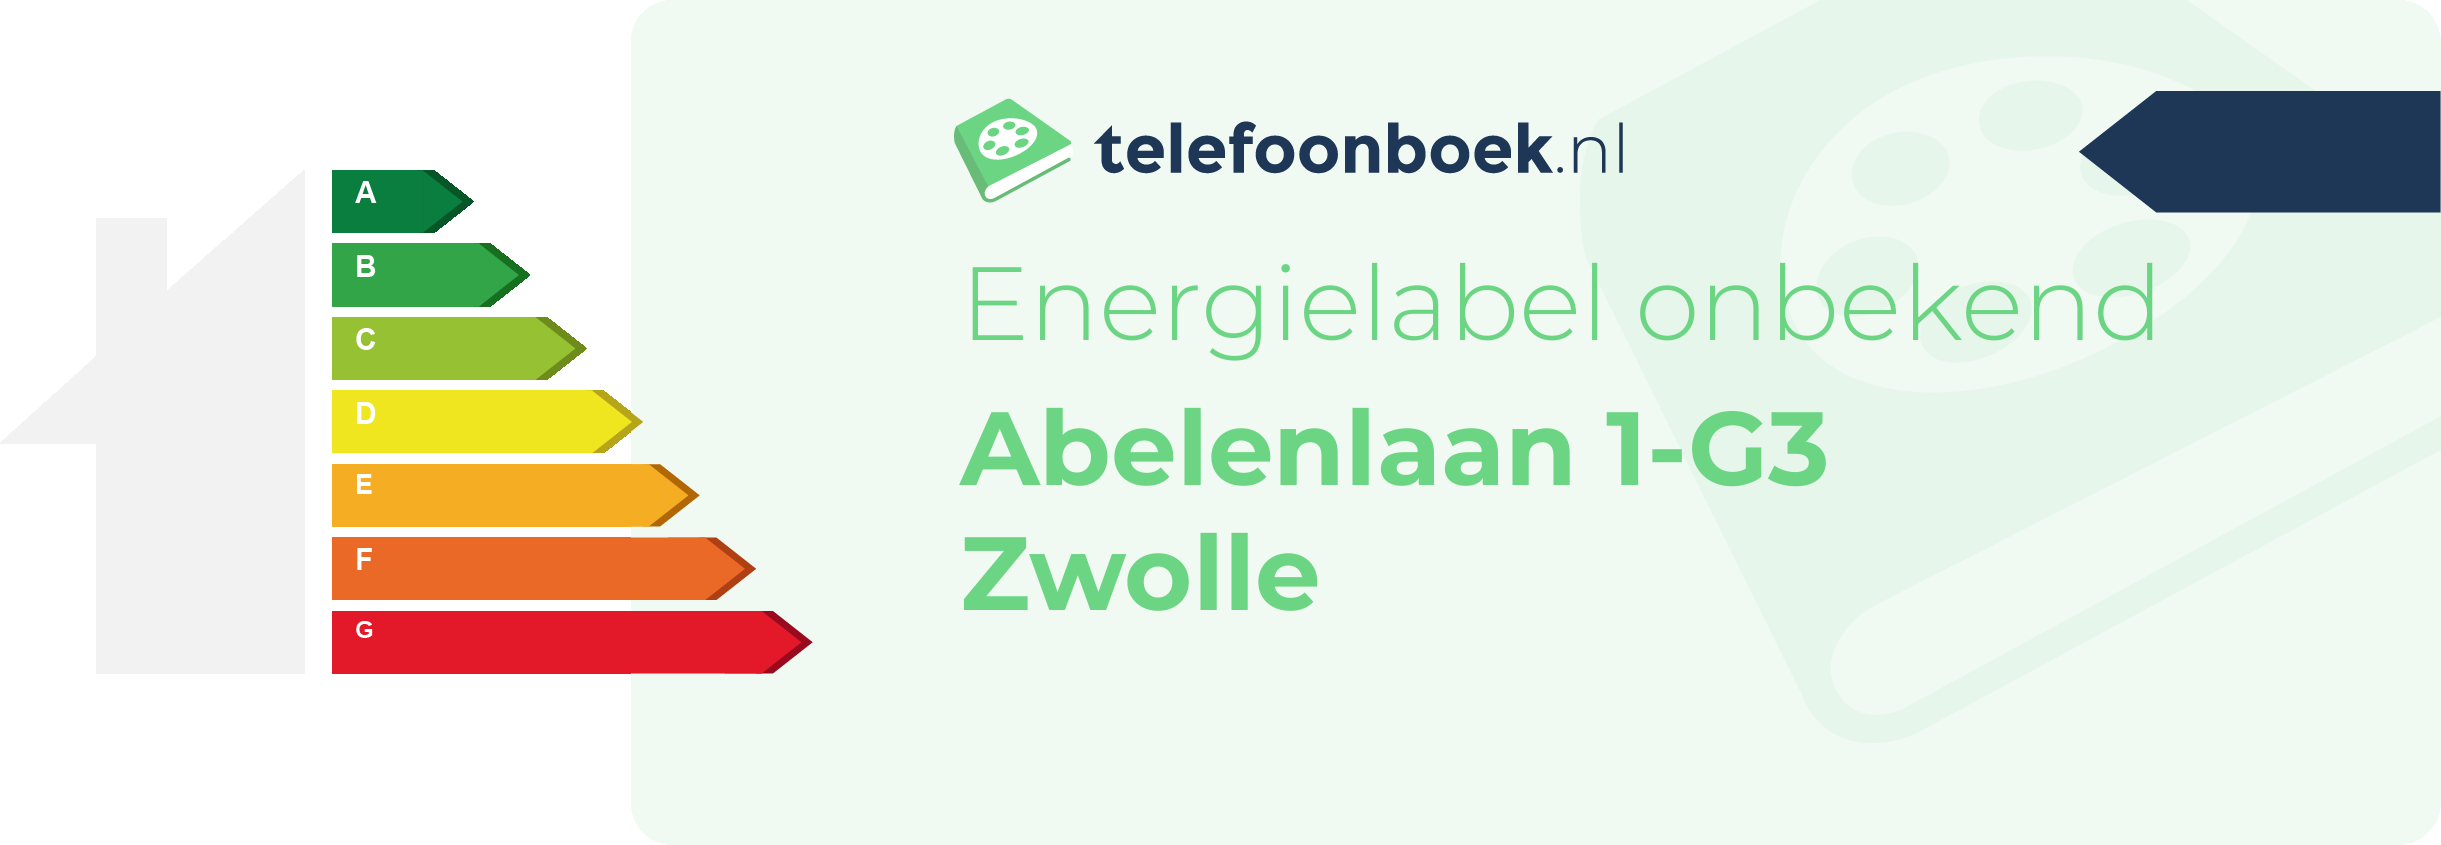 Energielabel Abelenlaan 1-G3 Zwolle